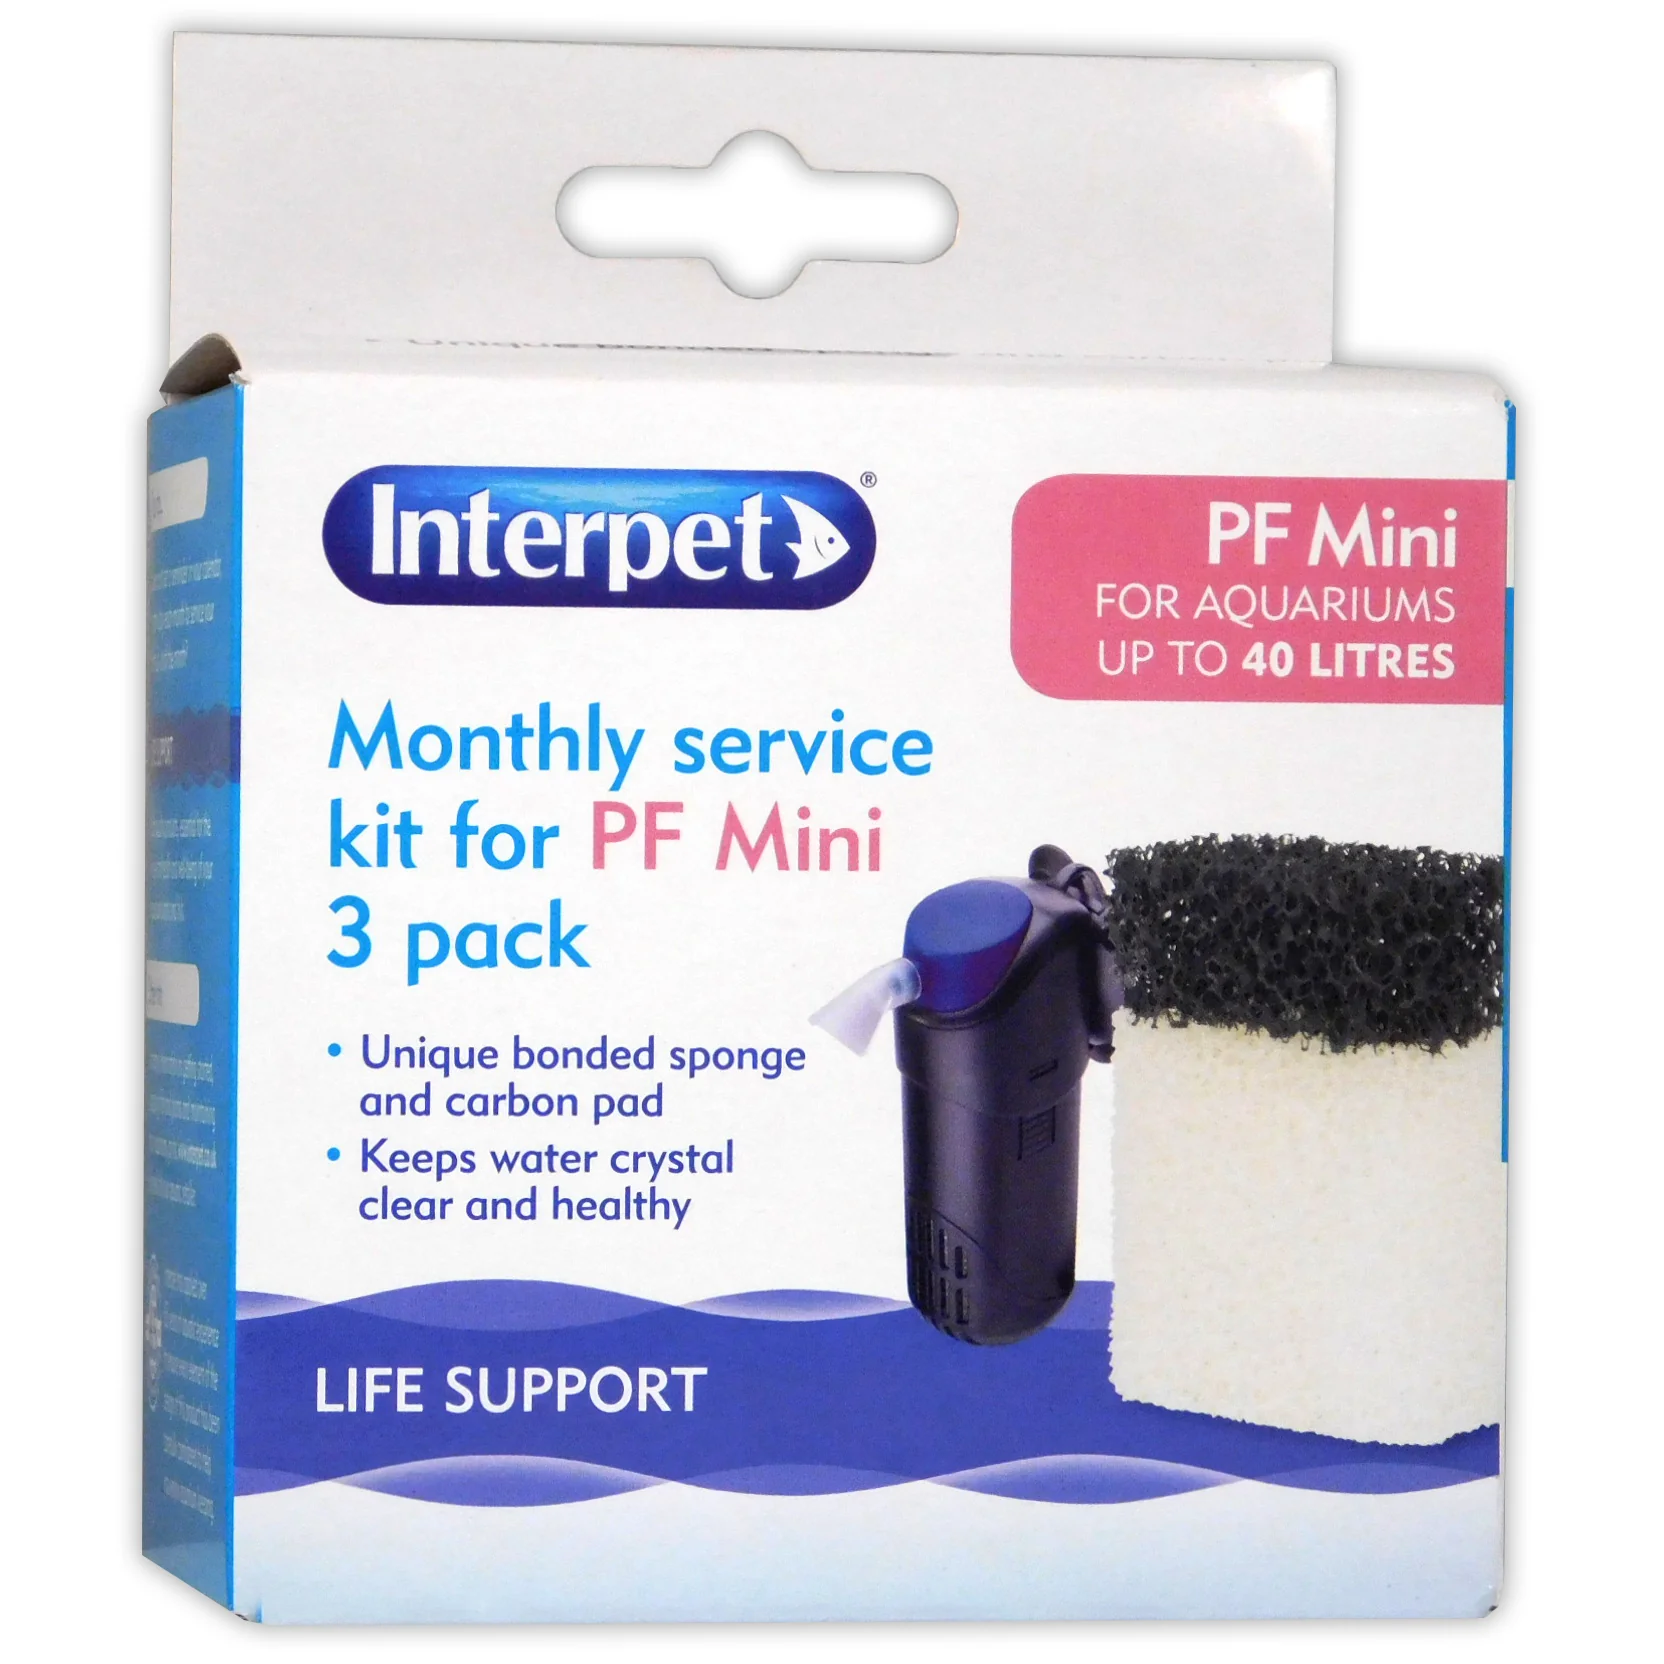 PF Mini Monthly service kit